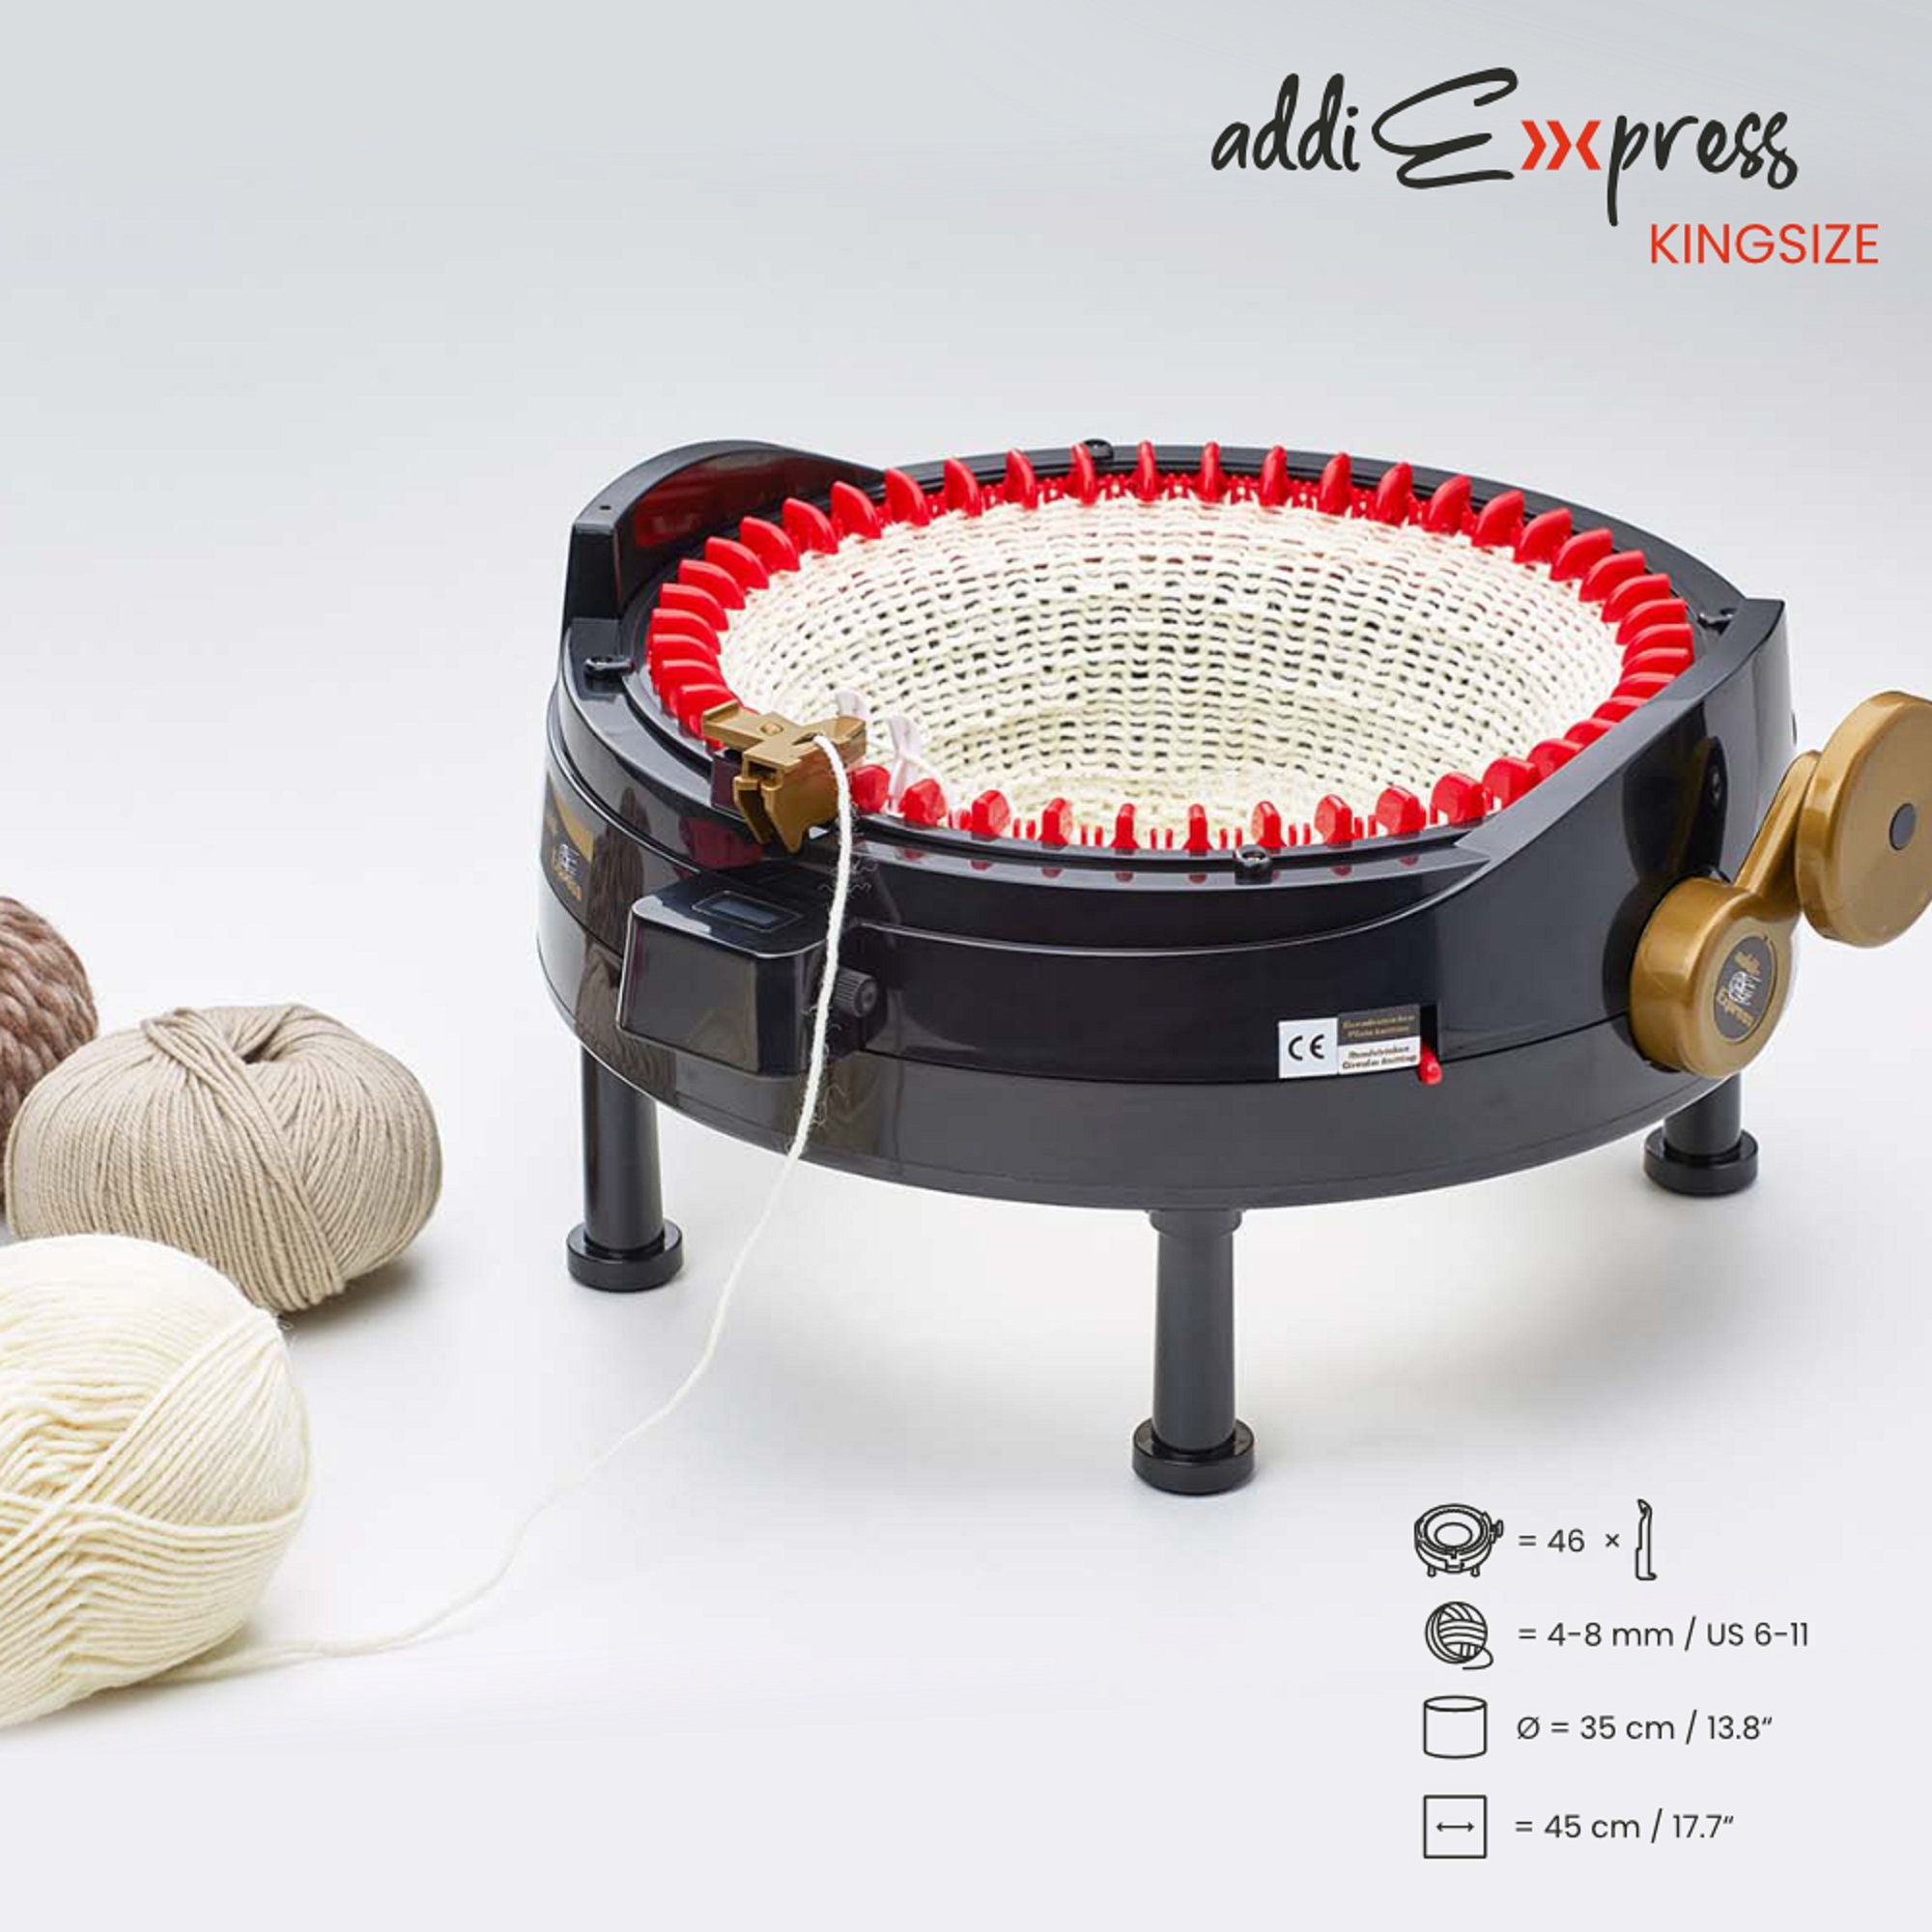 Addi Express Professional Knitting Machine - household items - by